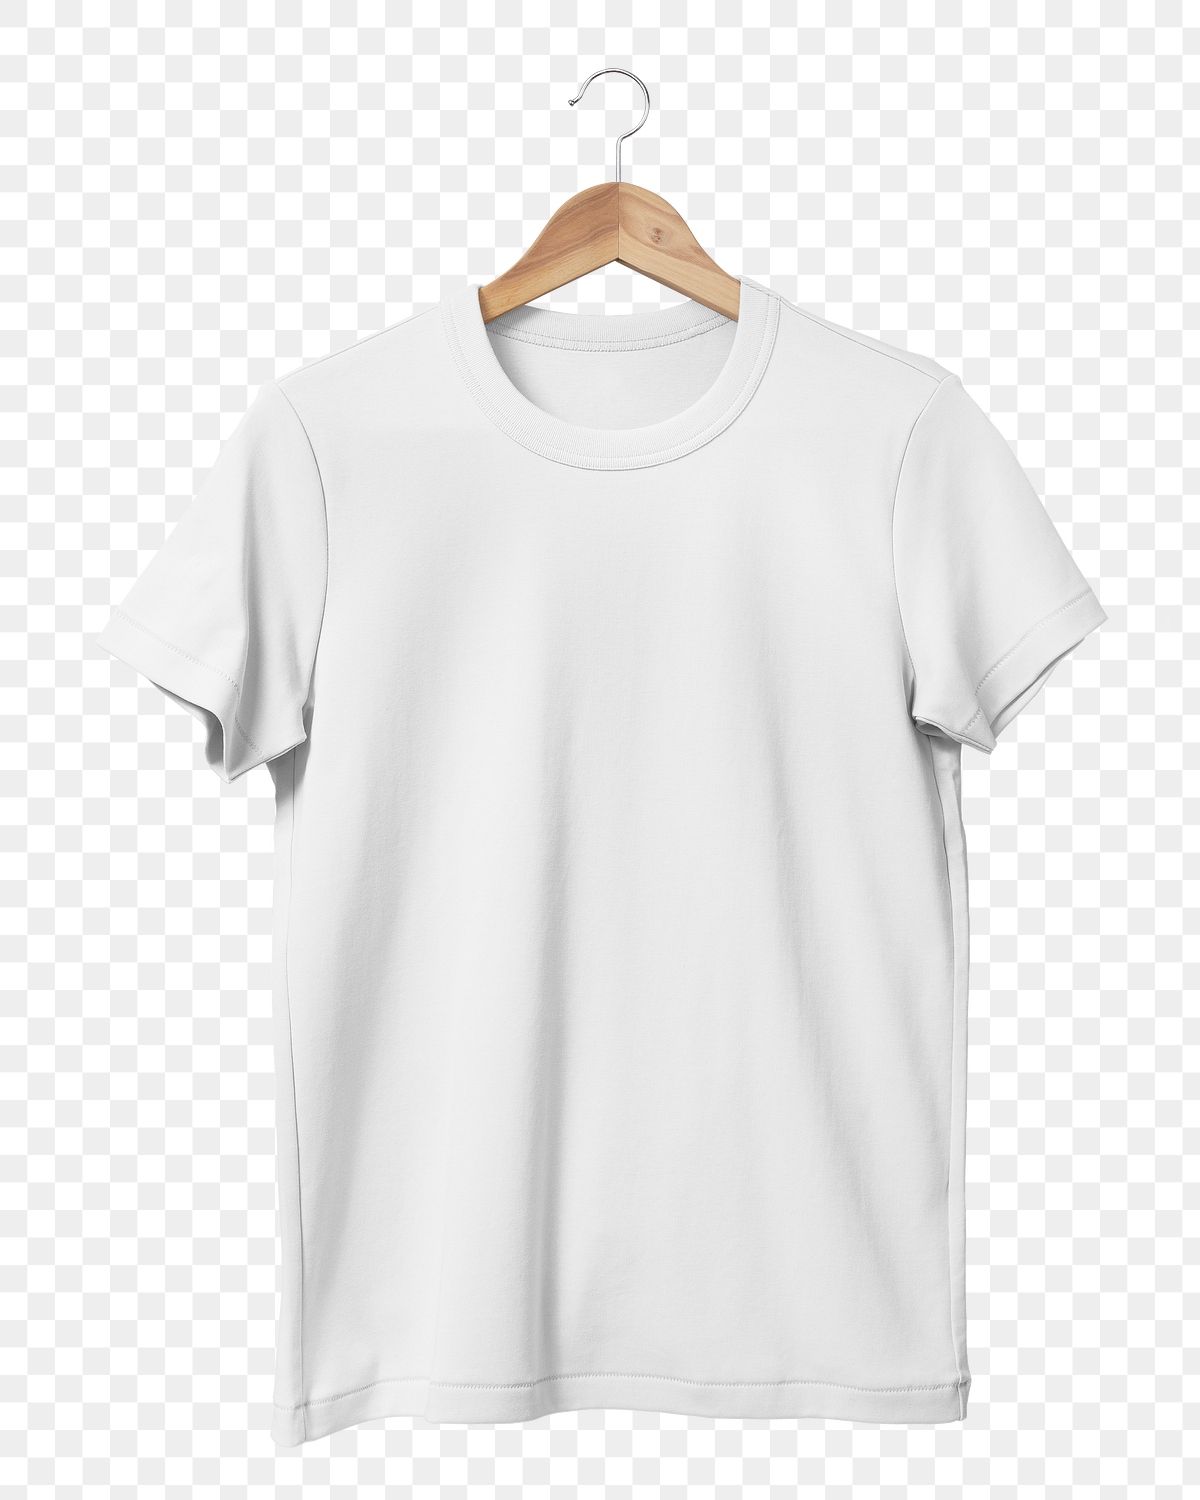 T-shirt png, white simple fashion, | Premium PNG Sticker - rawpixel